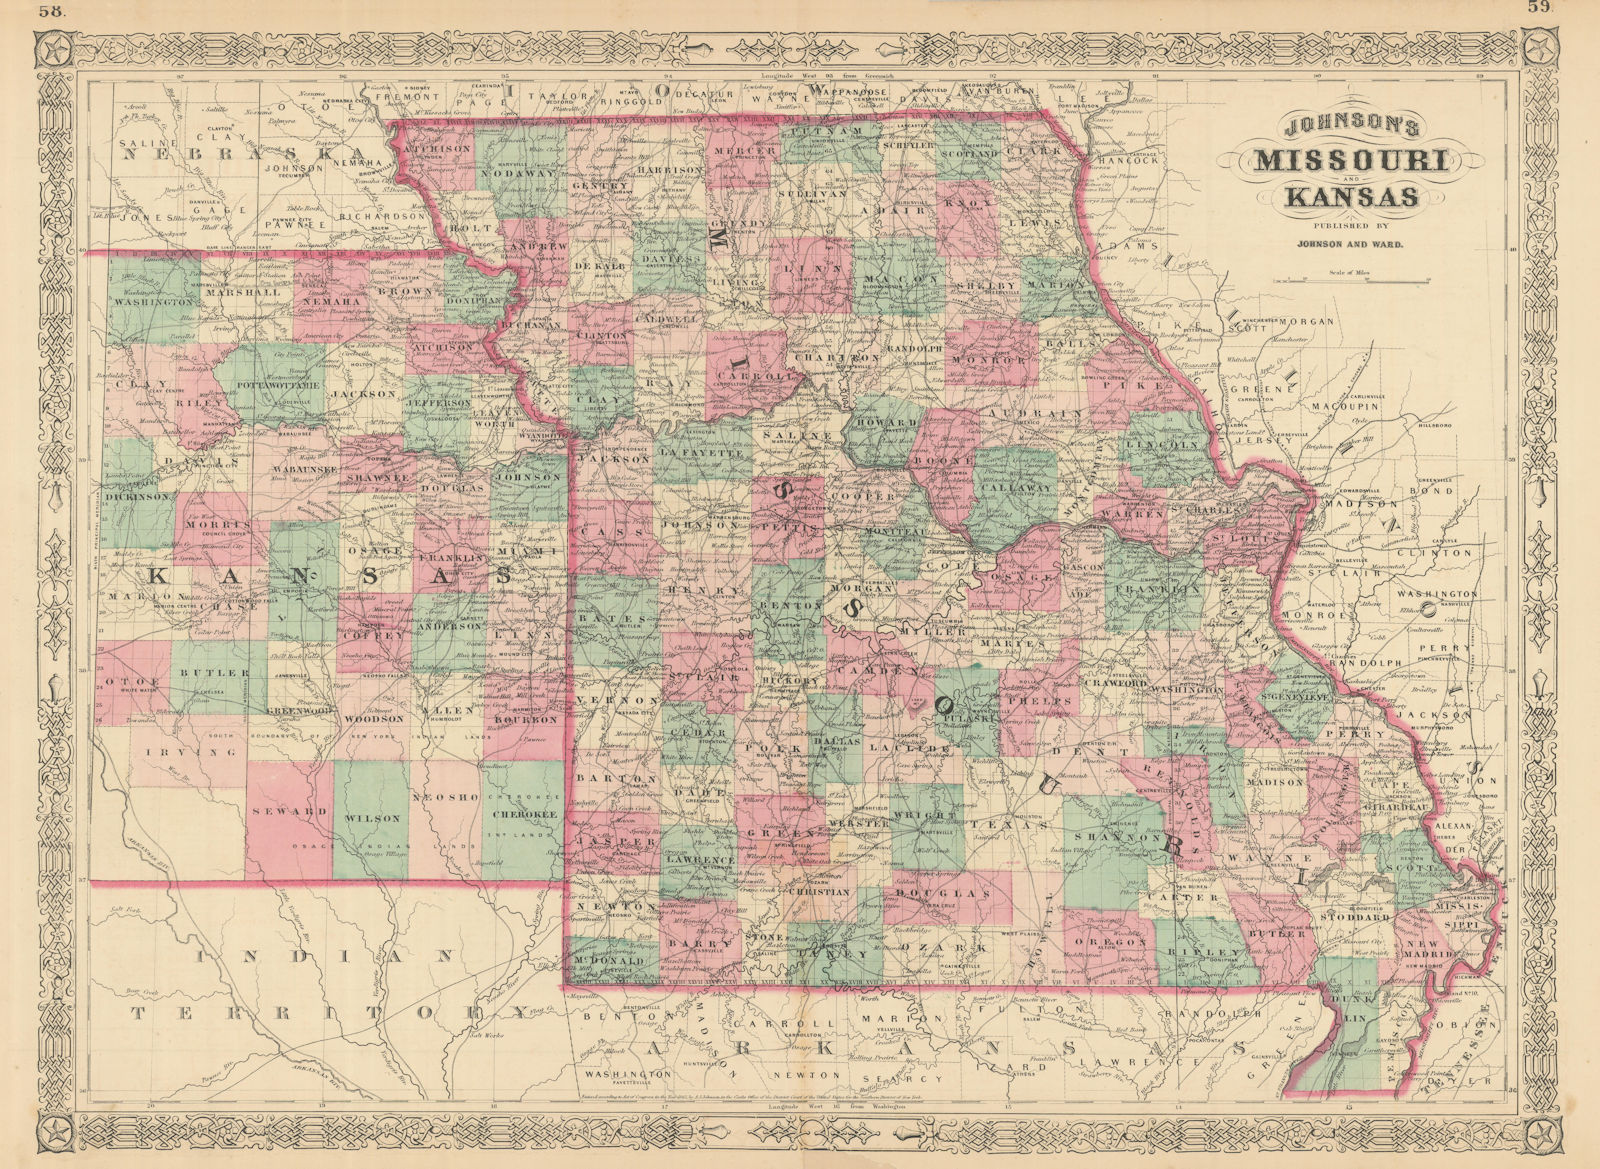 Johnson's Missouri & Kansas. US state map showing counties 1866 old